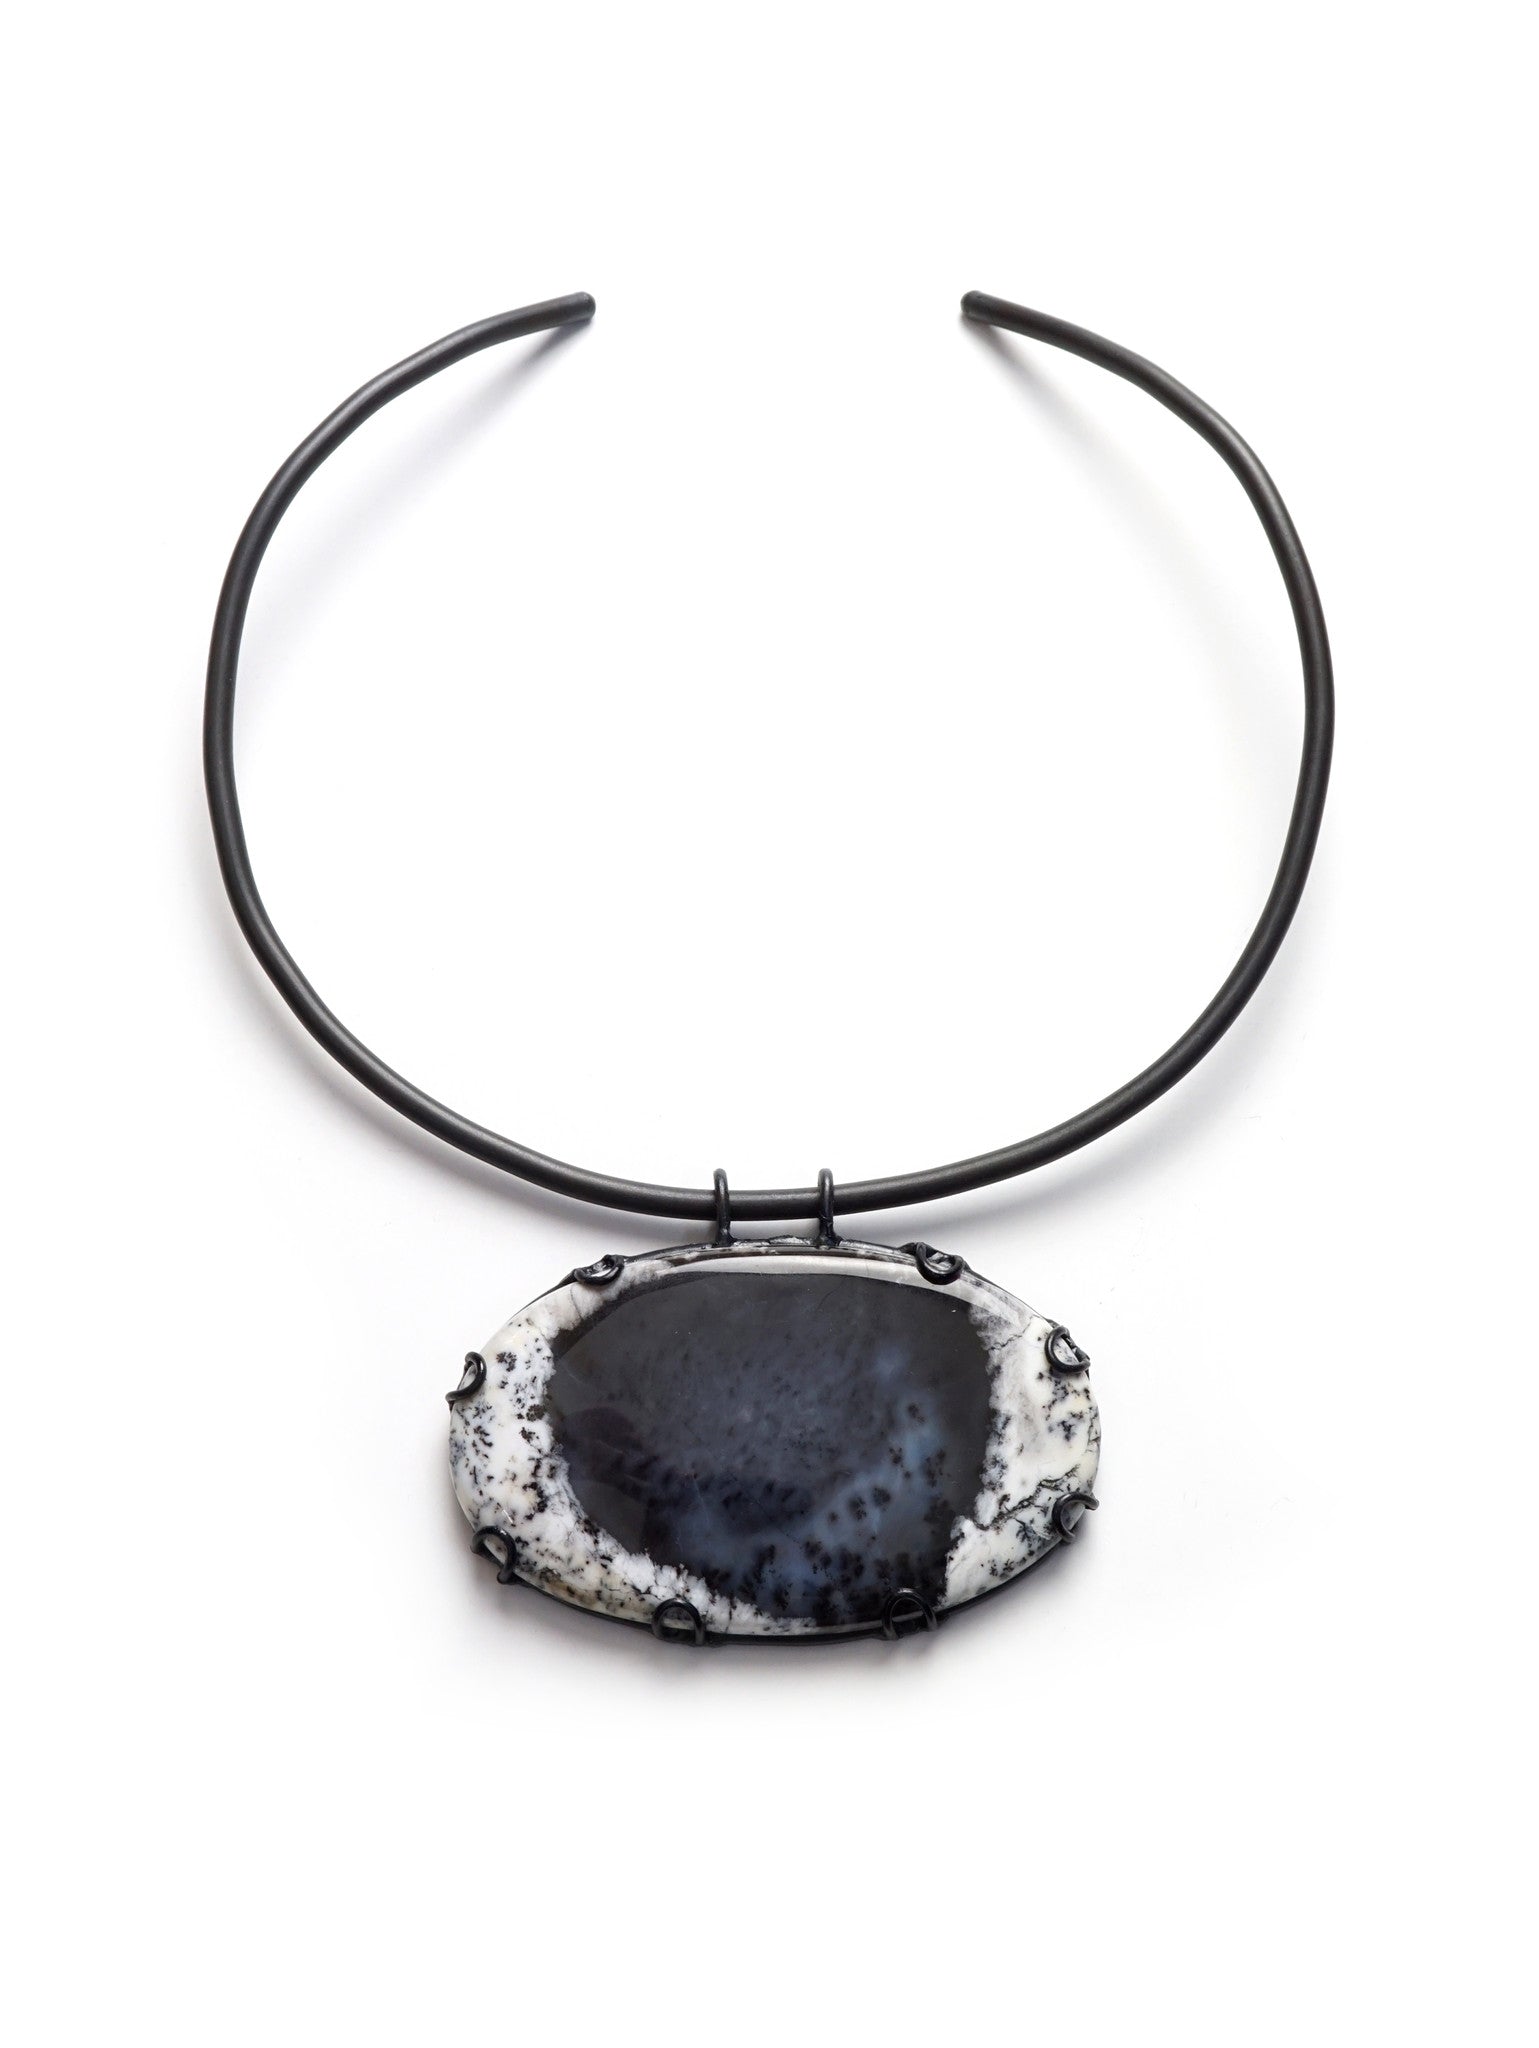 oval Contra Noir necklace